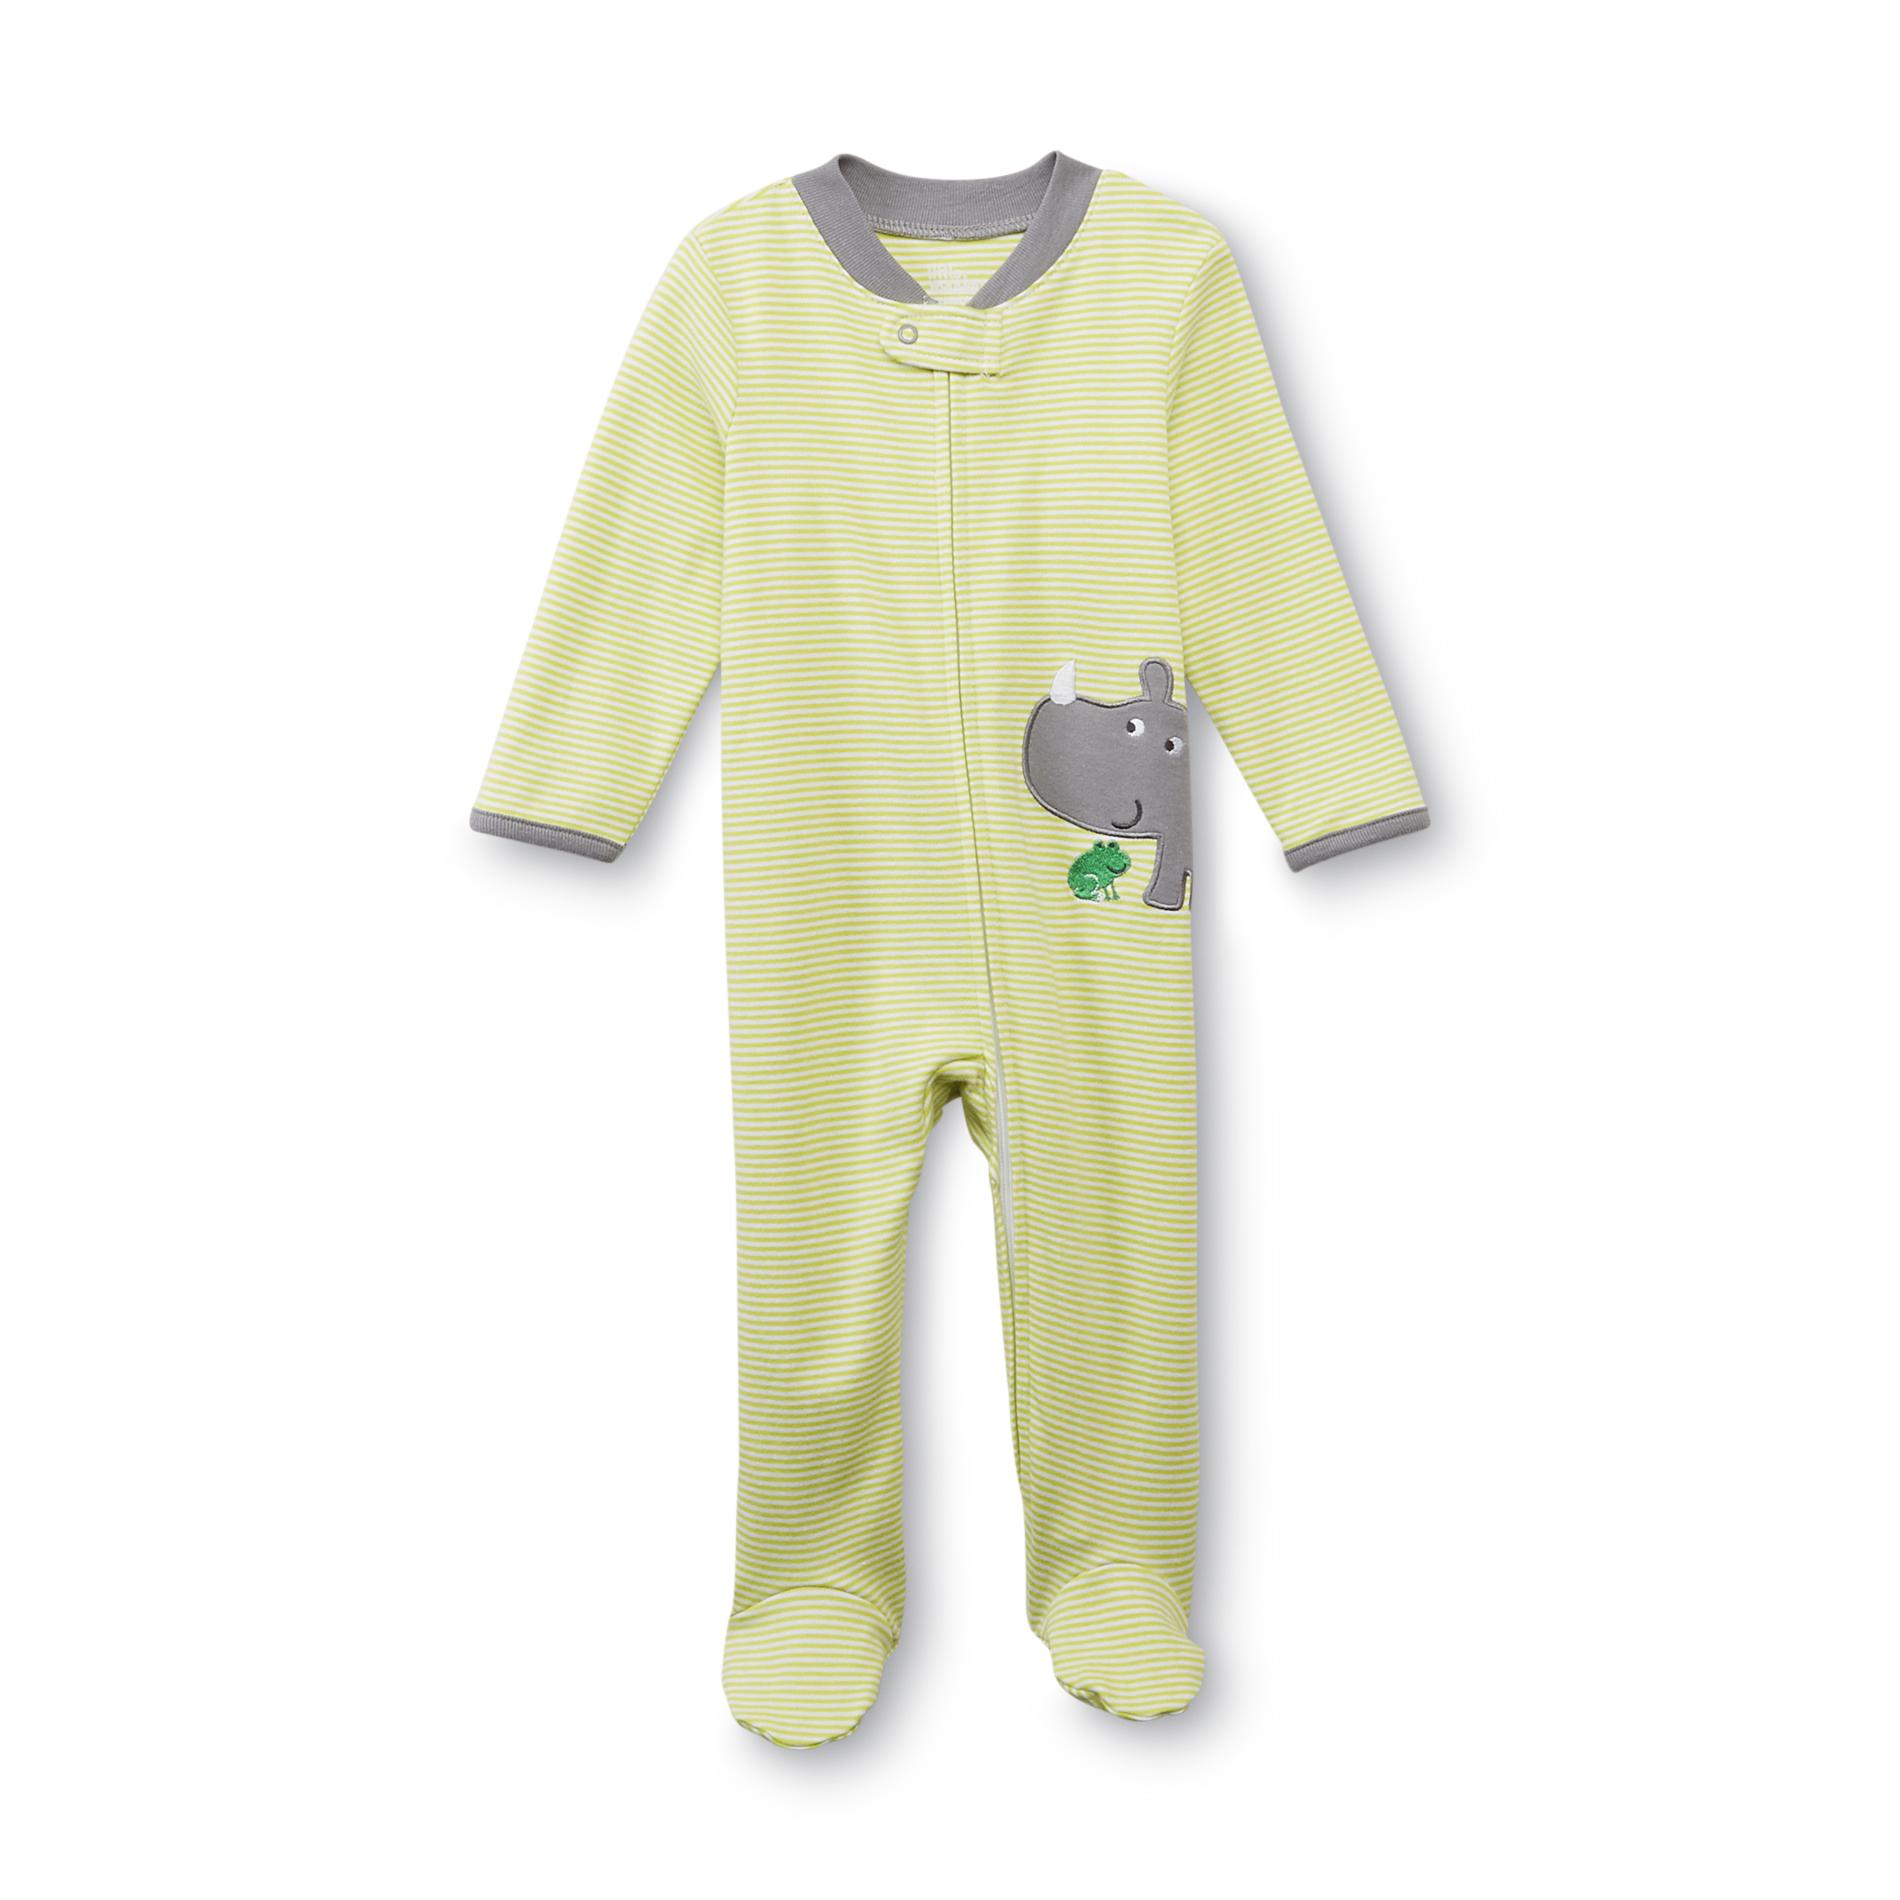 Little Wonders Newborn Boy's Footed Sleeper Pajamas - Striped